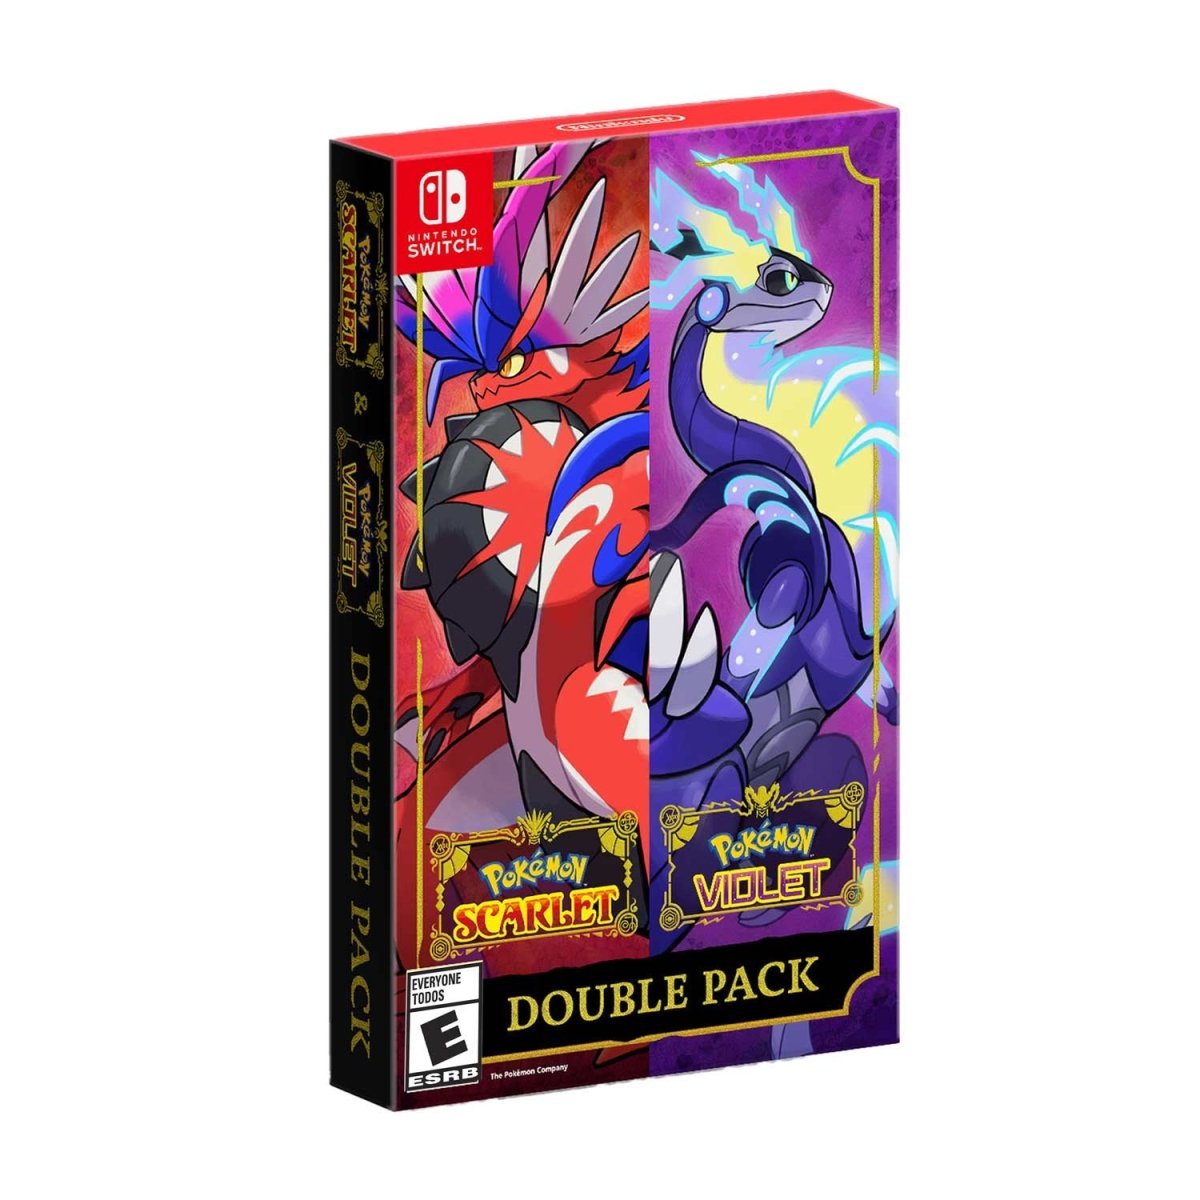 Pokemon: Scarlet & Violet - All exclusive pokemons